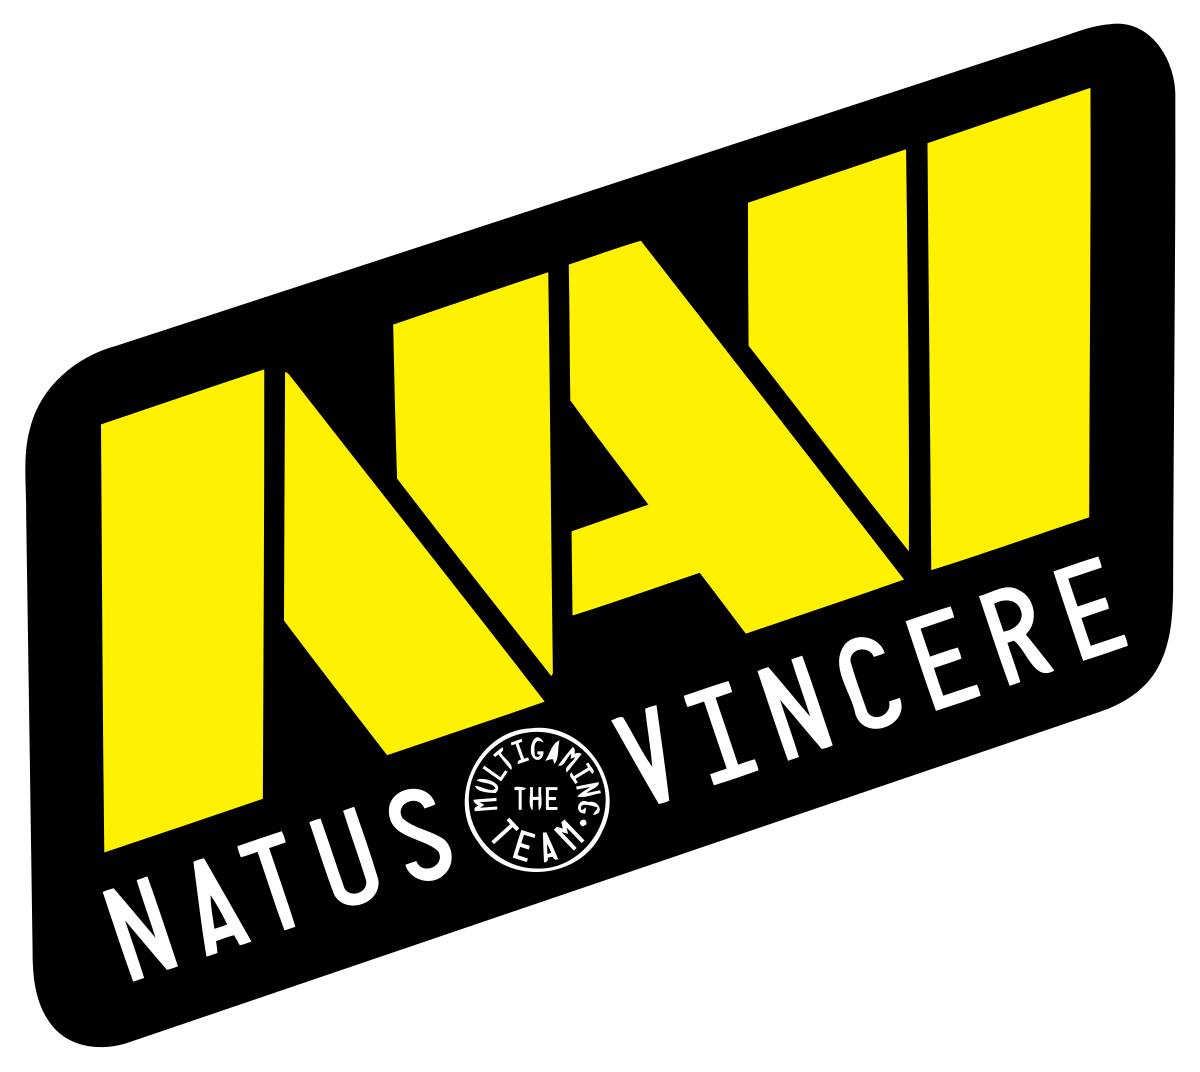 Нави стендофф. Натус винсер. Нави логотип 2021. Navi CS go логотип 2021. Логотип нави без фона.